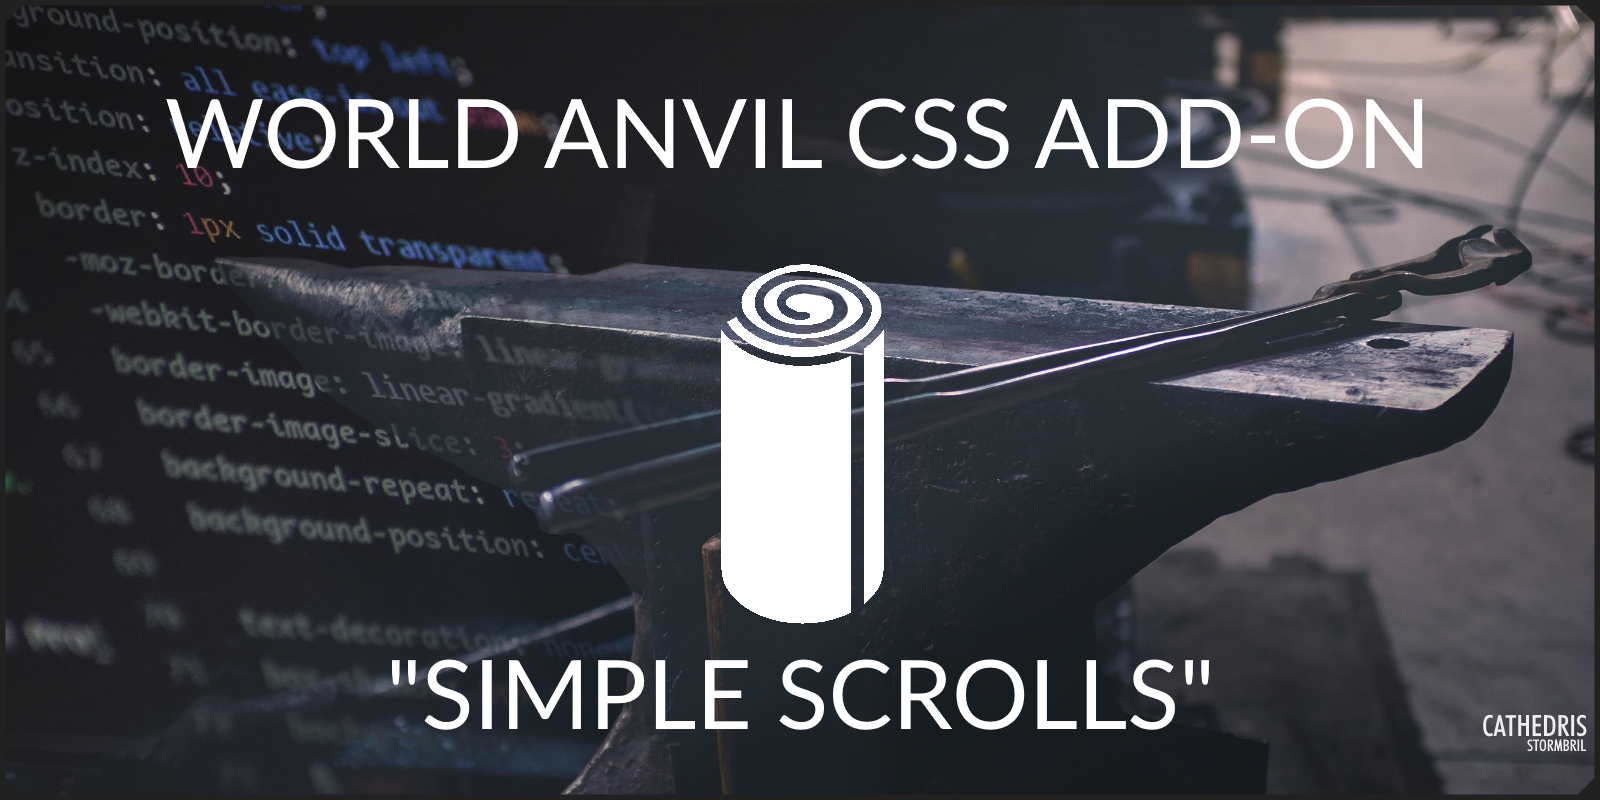 World Anvil CSS add-on: Simple Scrolls